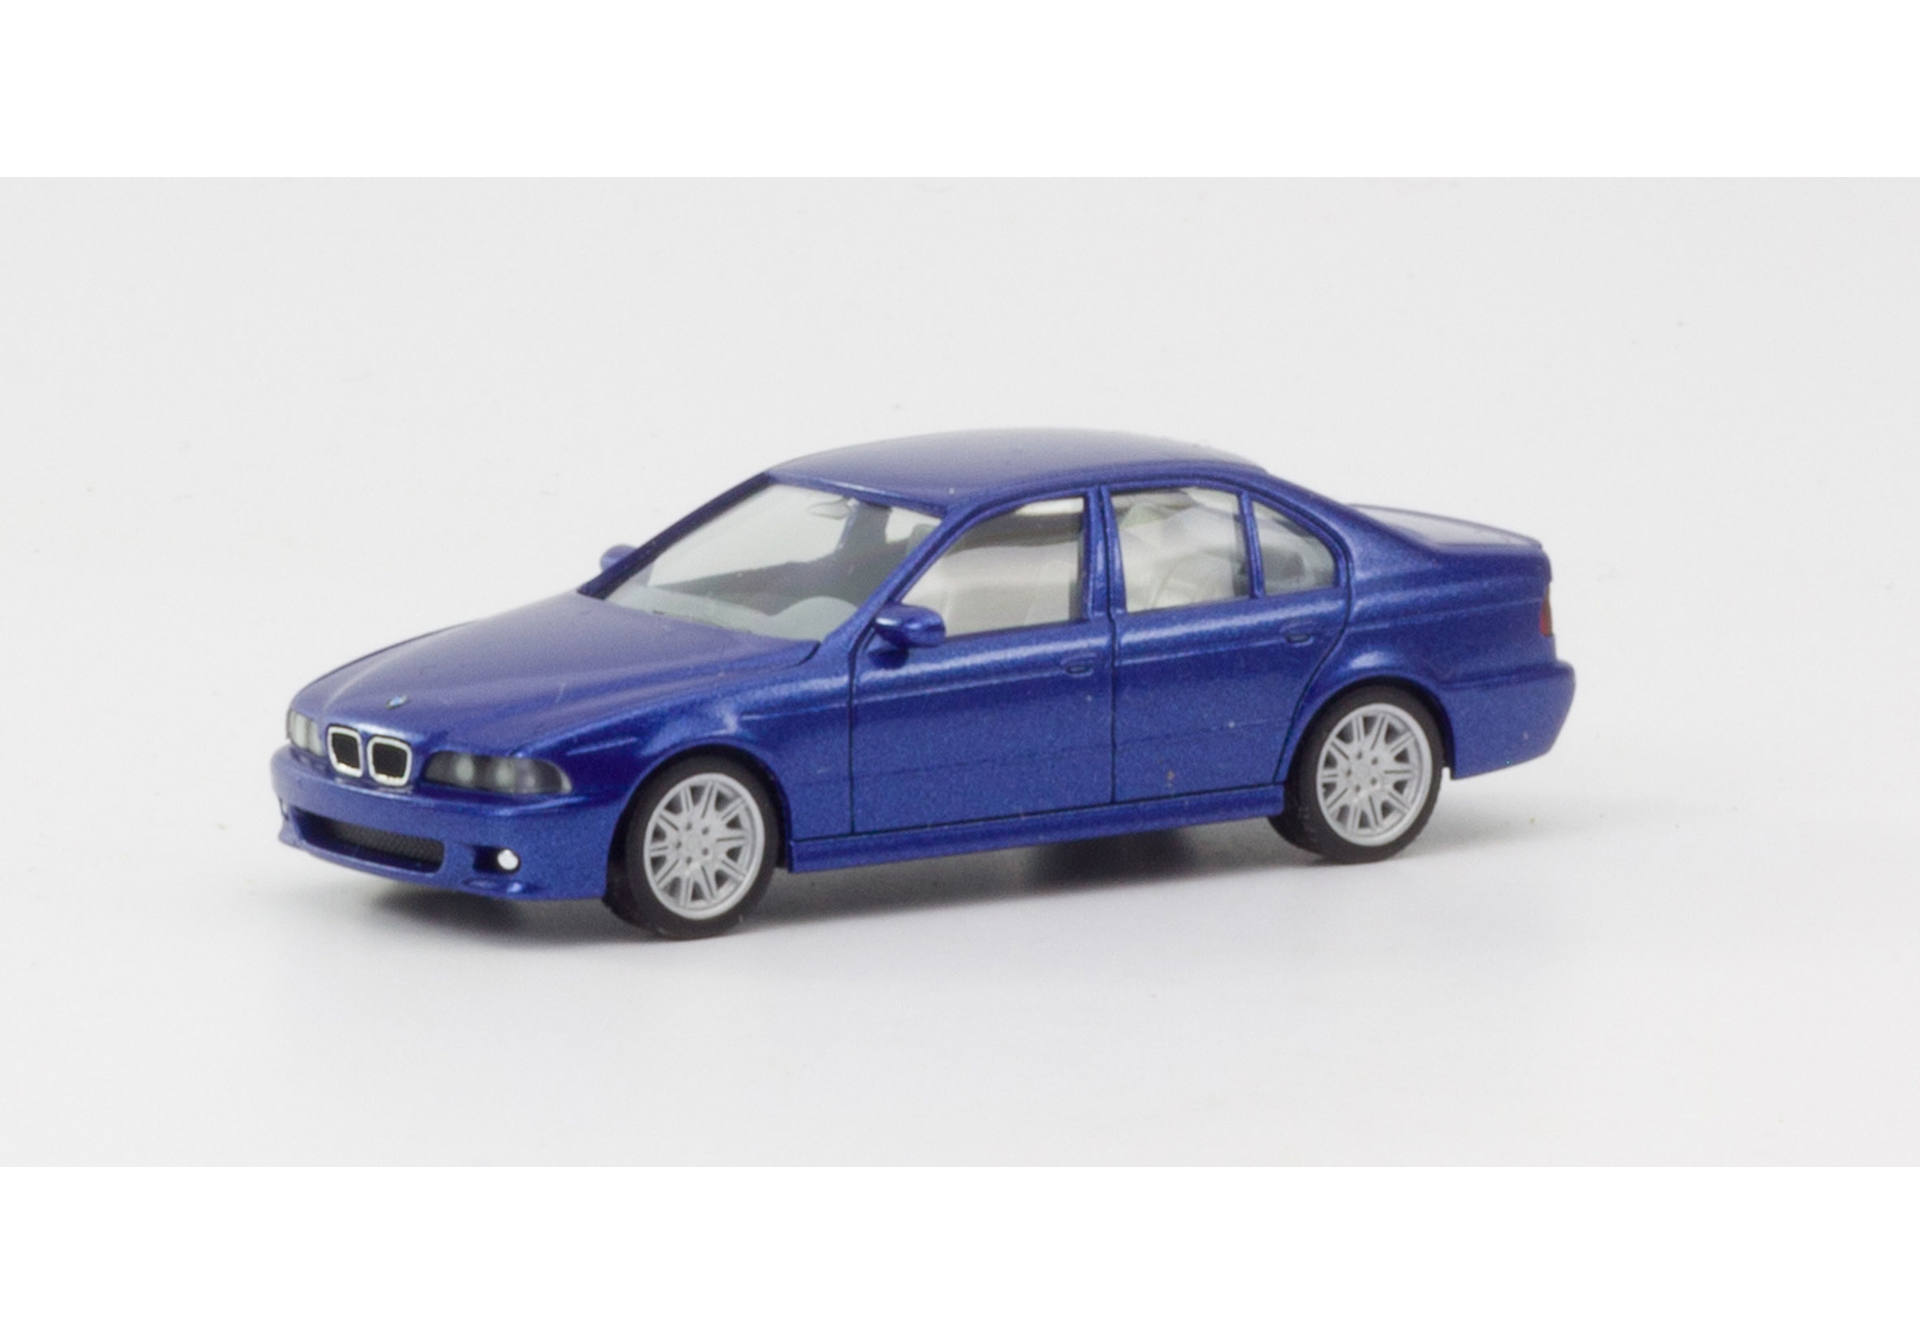 BMW M5, Montecarlo blue metallic.